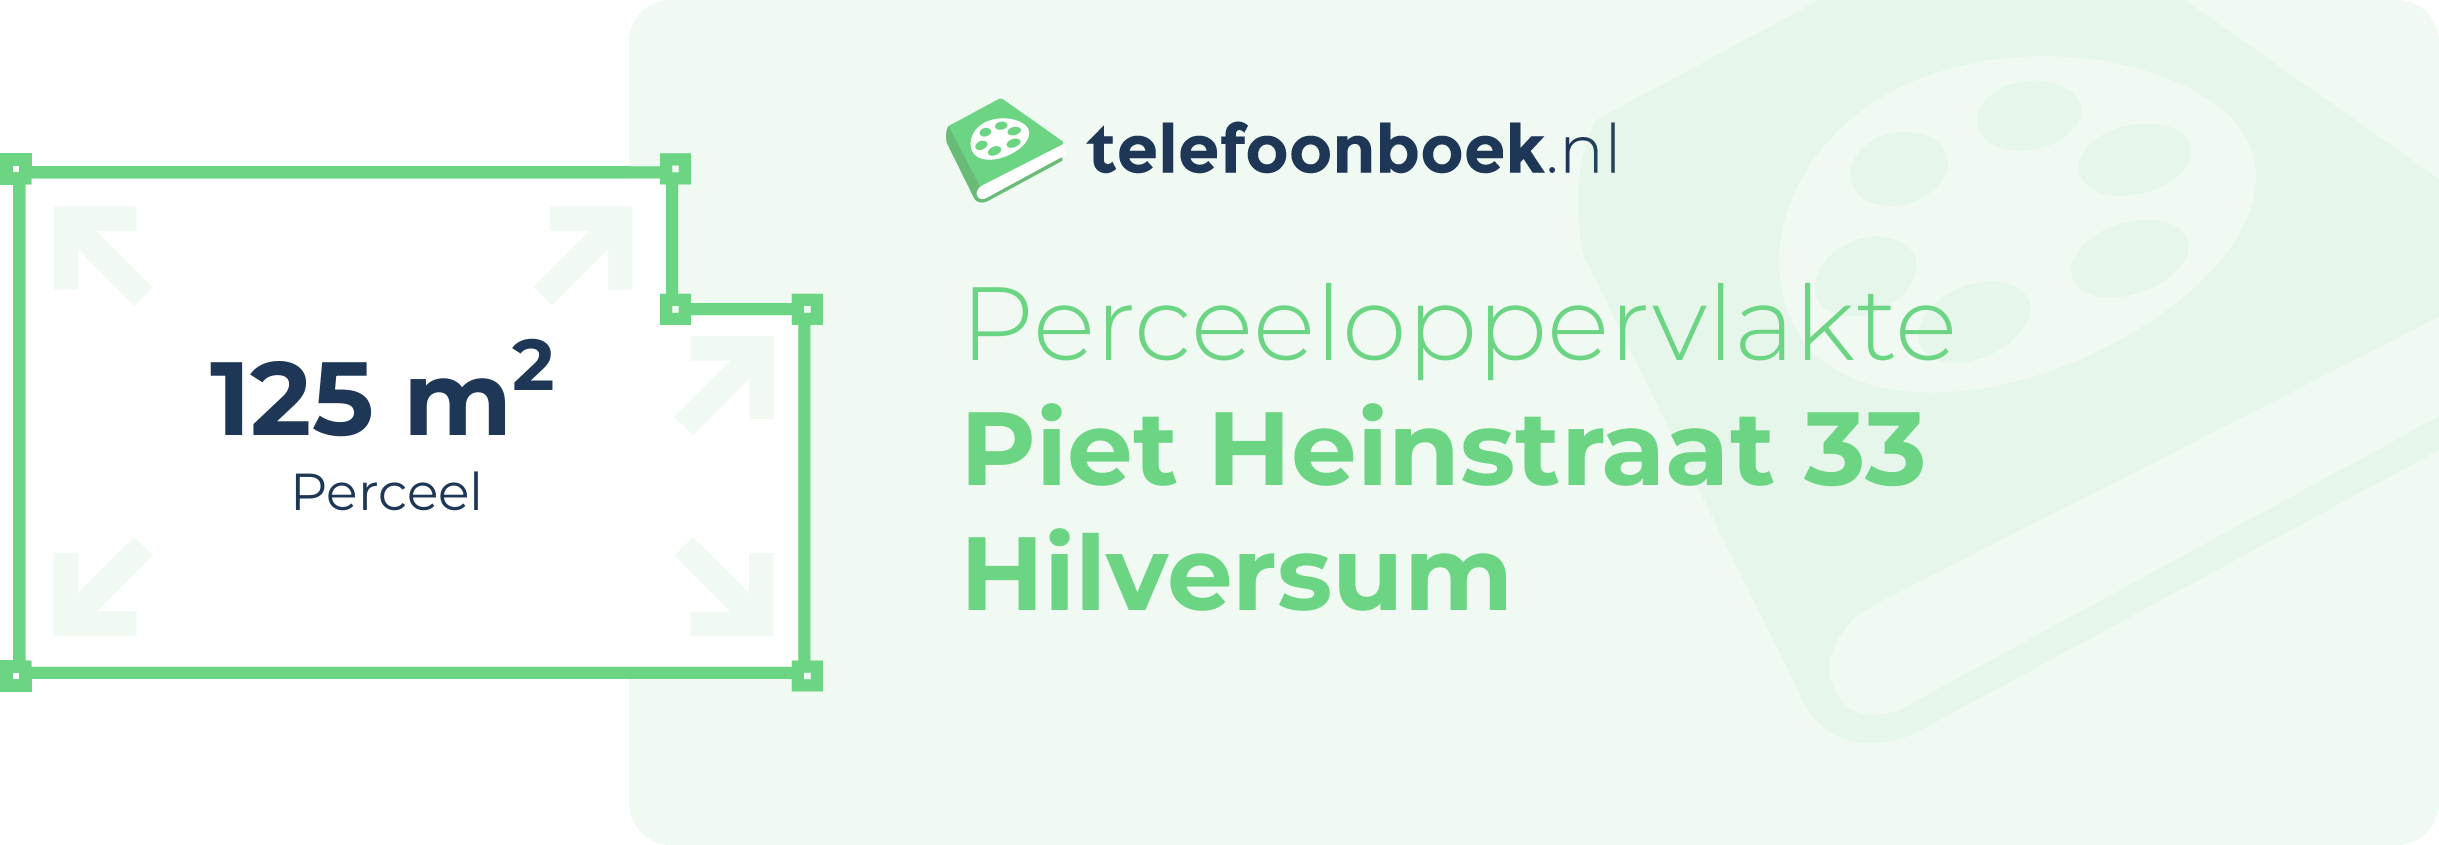 Perceeloppervlakte Piet Heinstraat 33 Hilversum